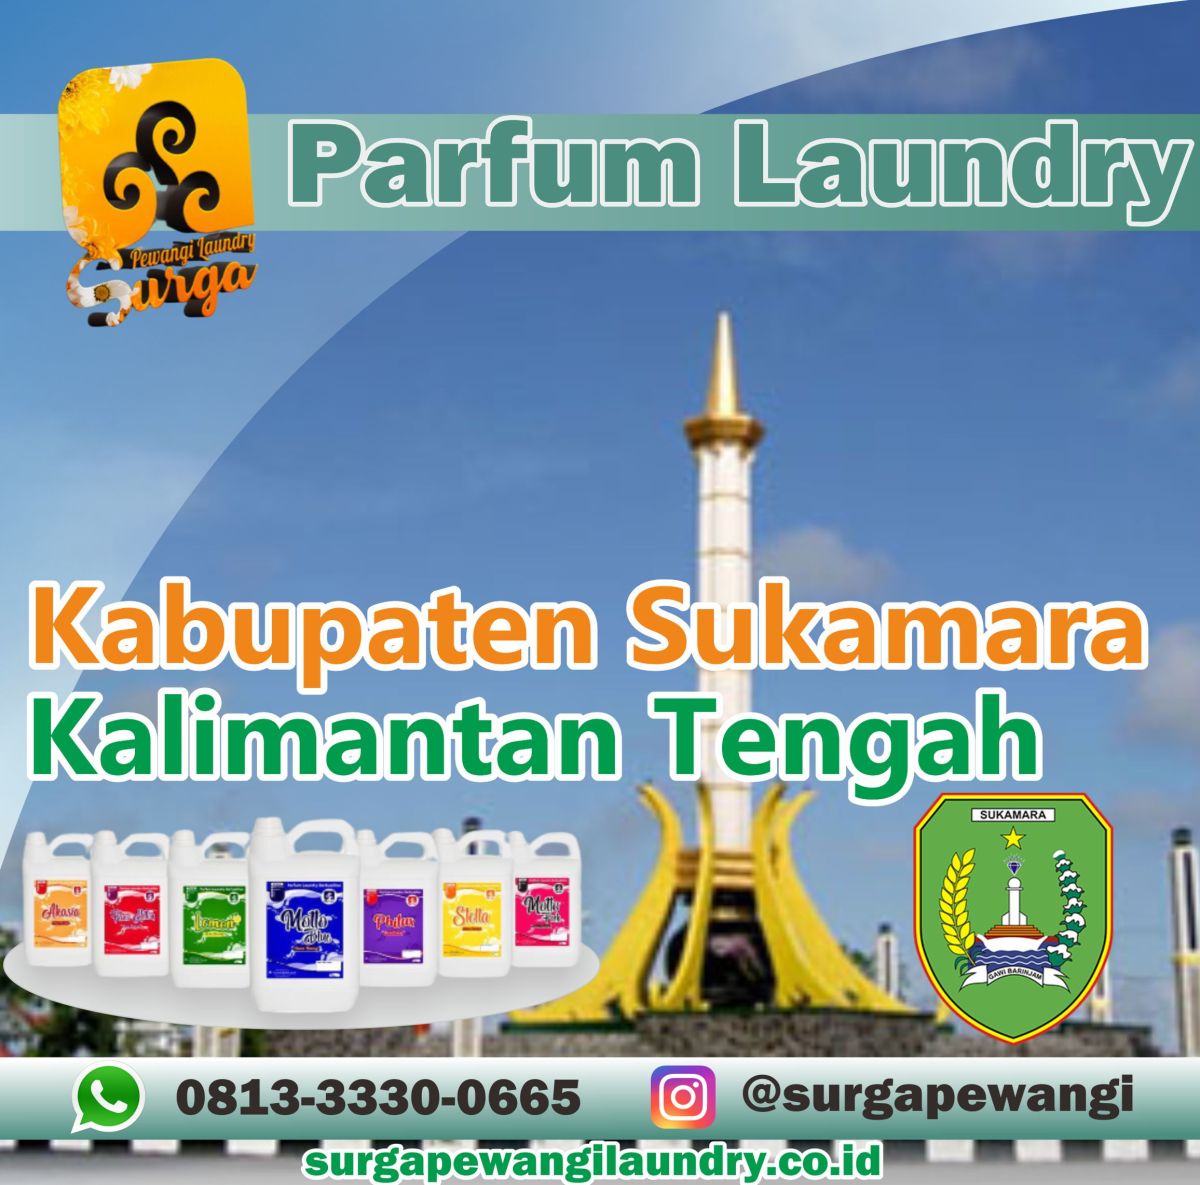 Parfum Laundry Kabupaten Sukamara, Kalimantan Tengah